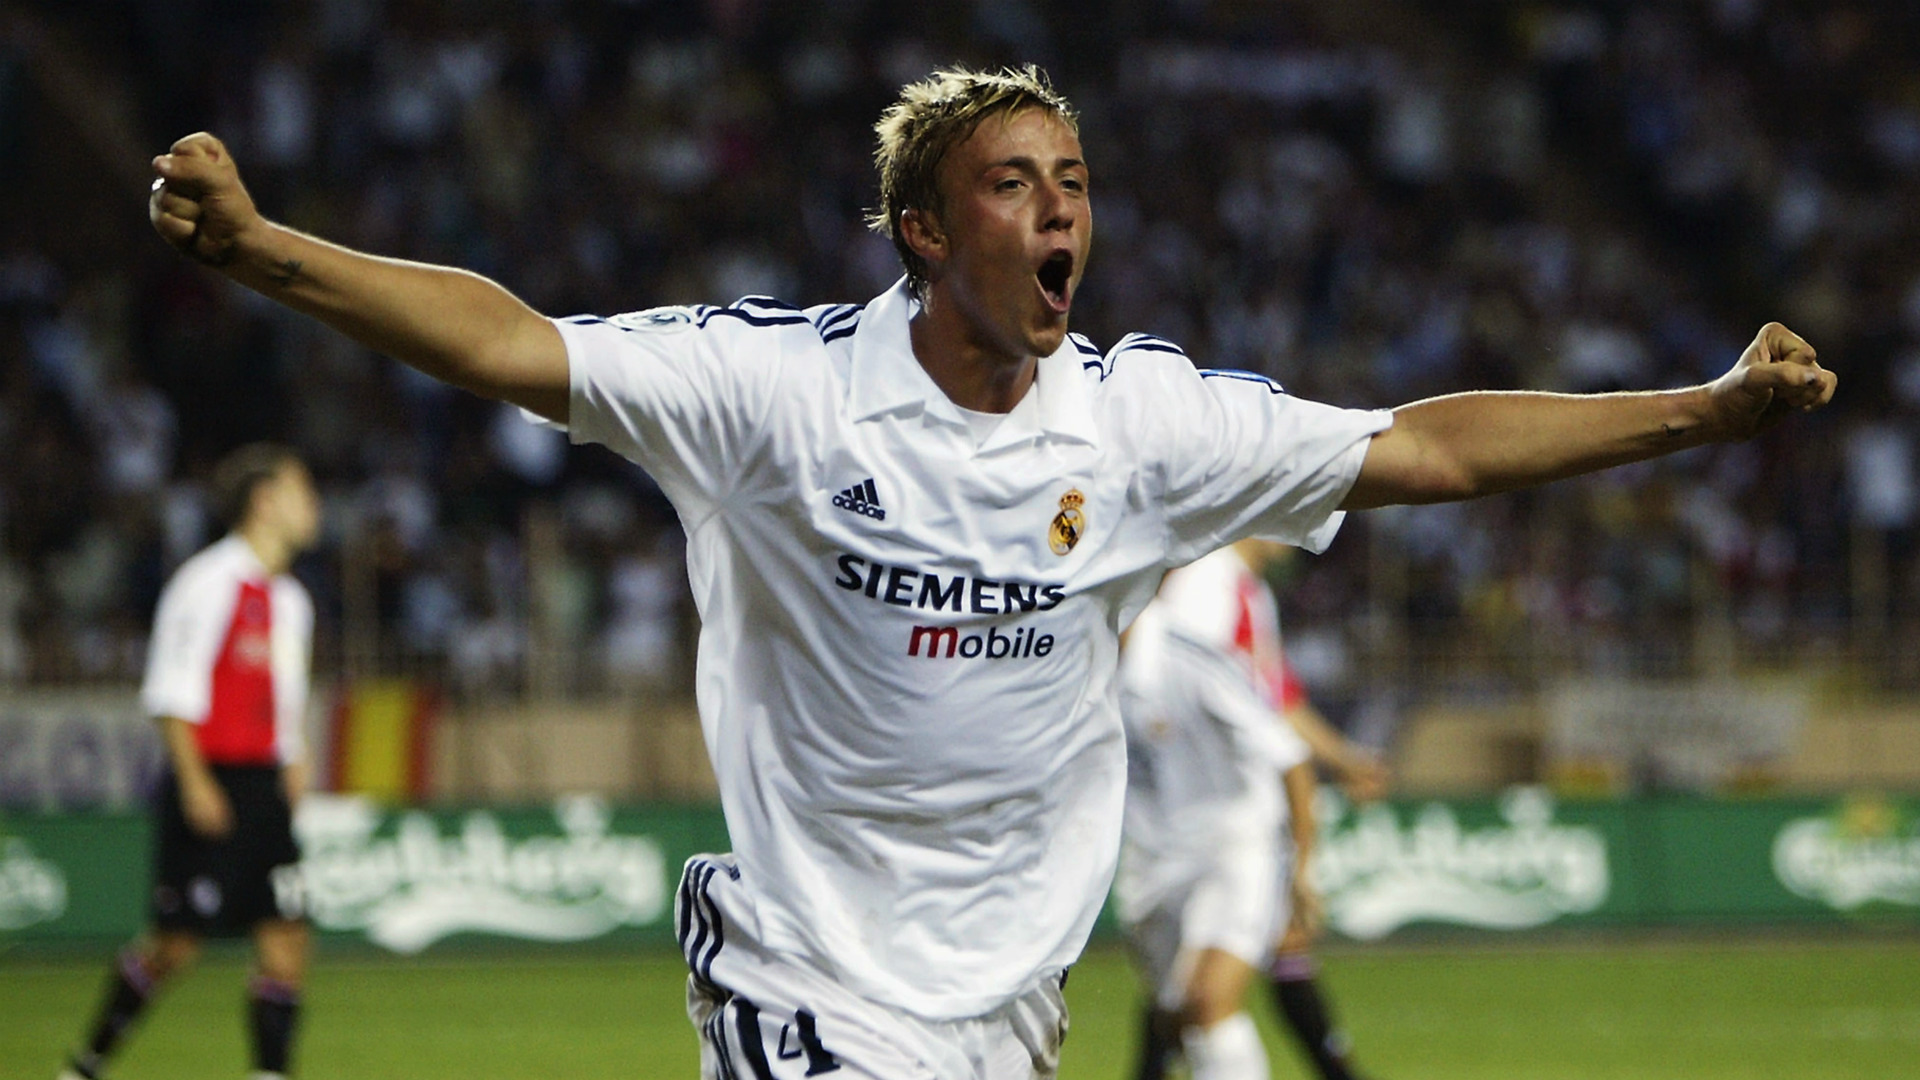 Guti ex Real Madrid player - Goal.com1920 x 1080